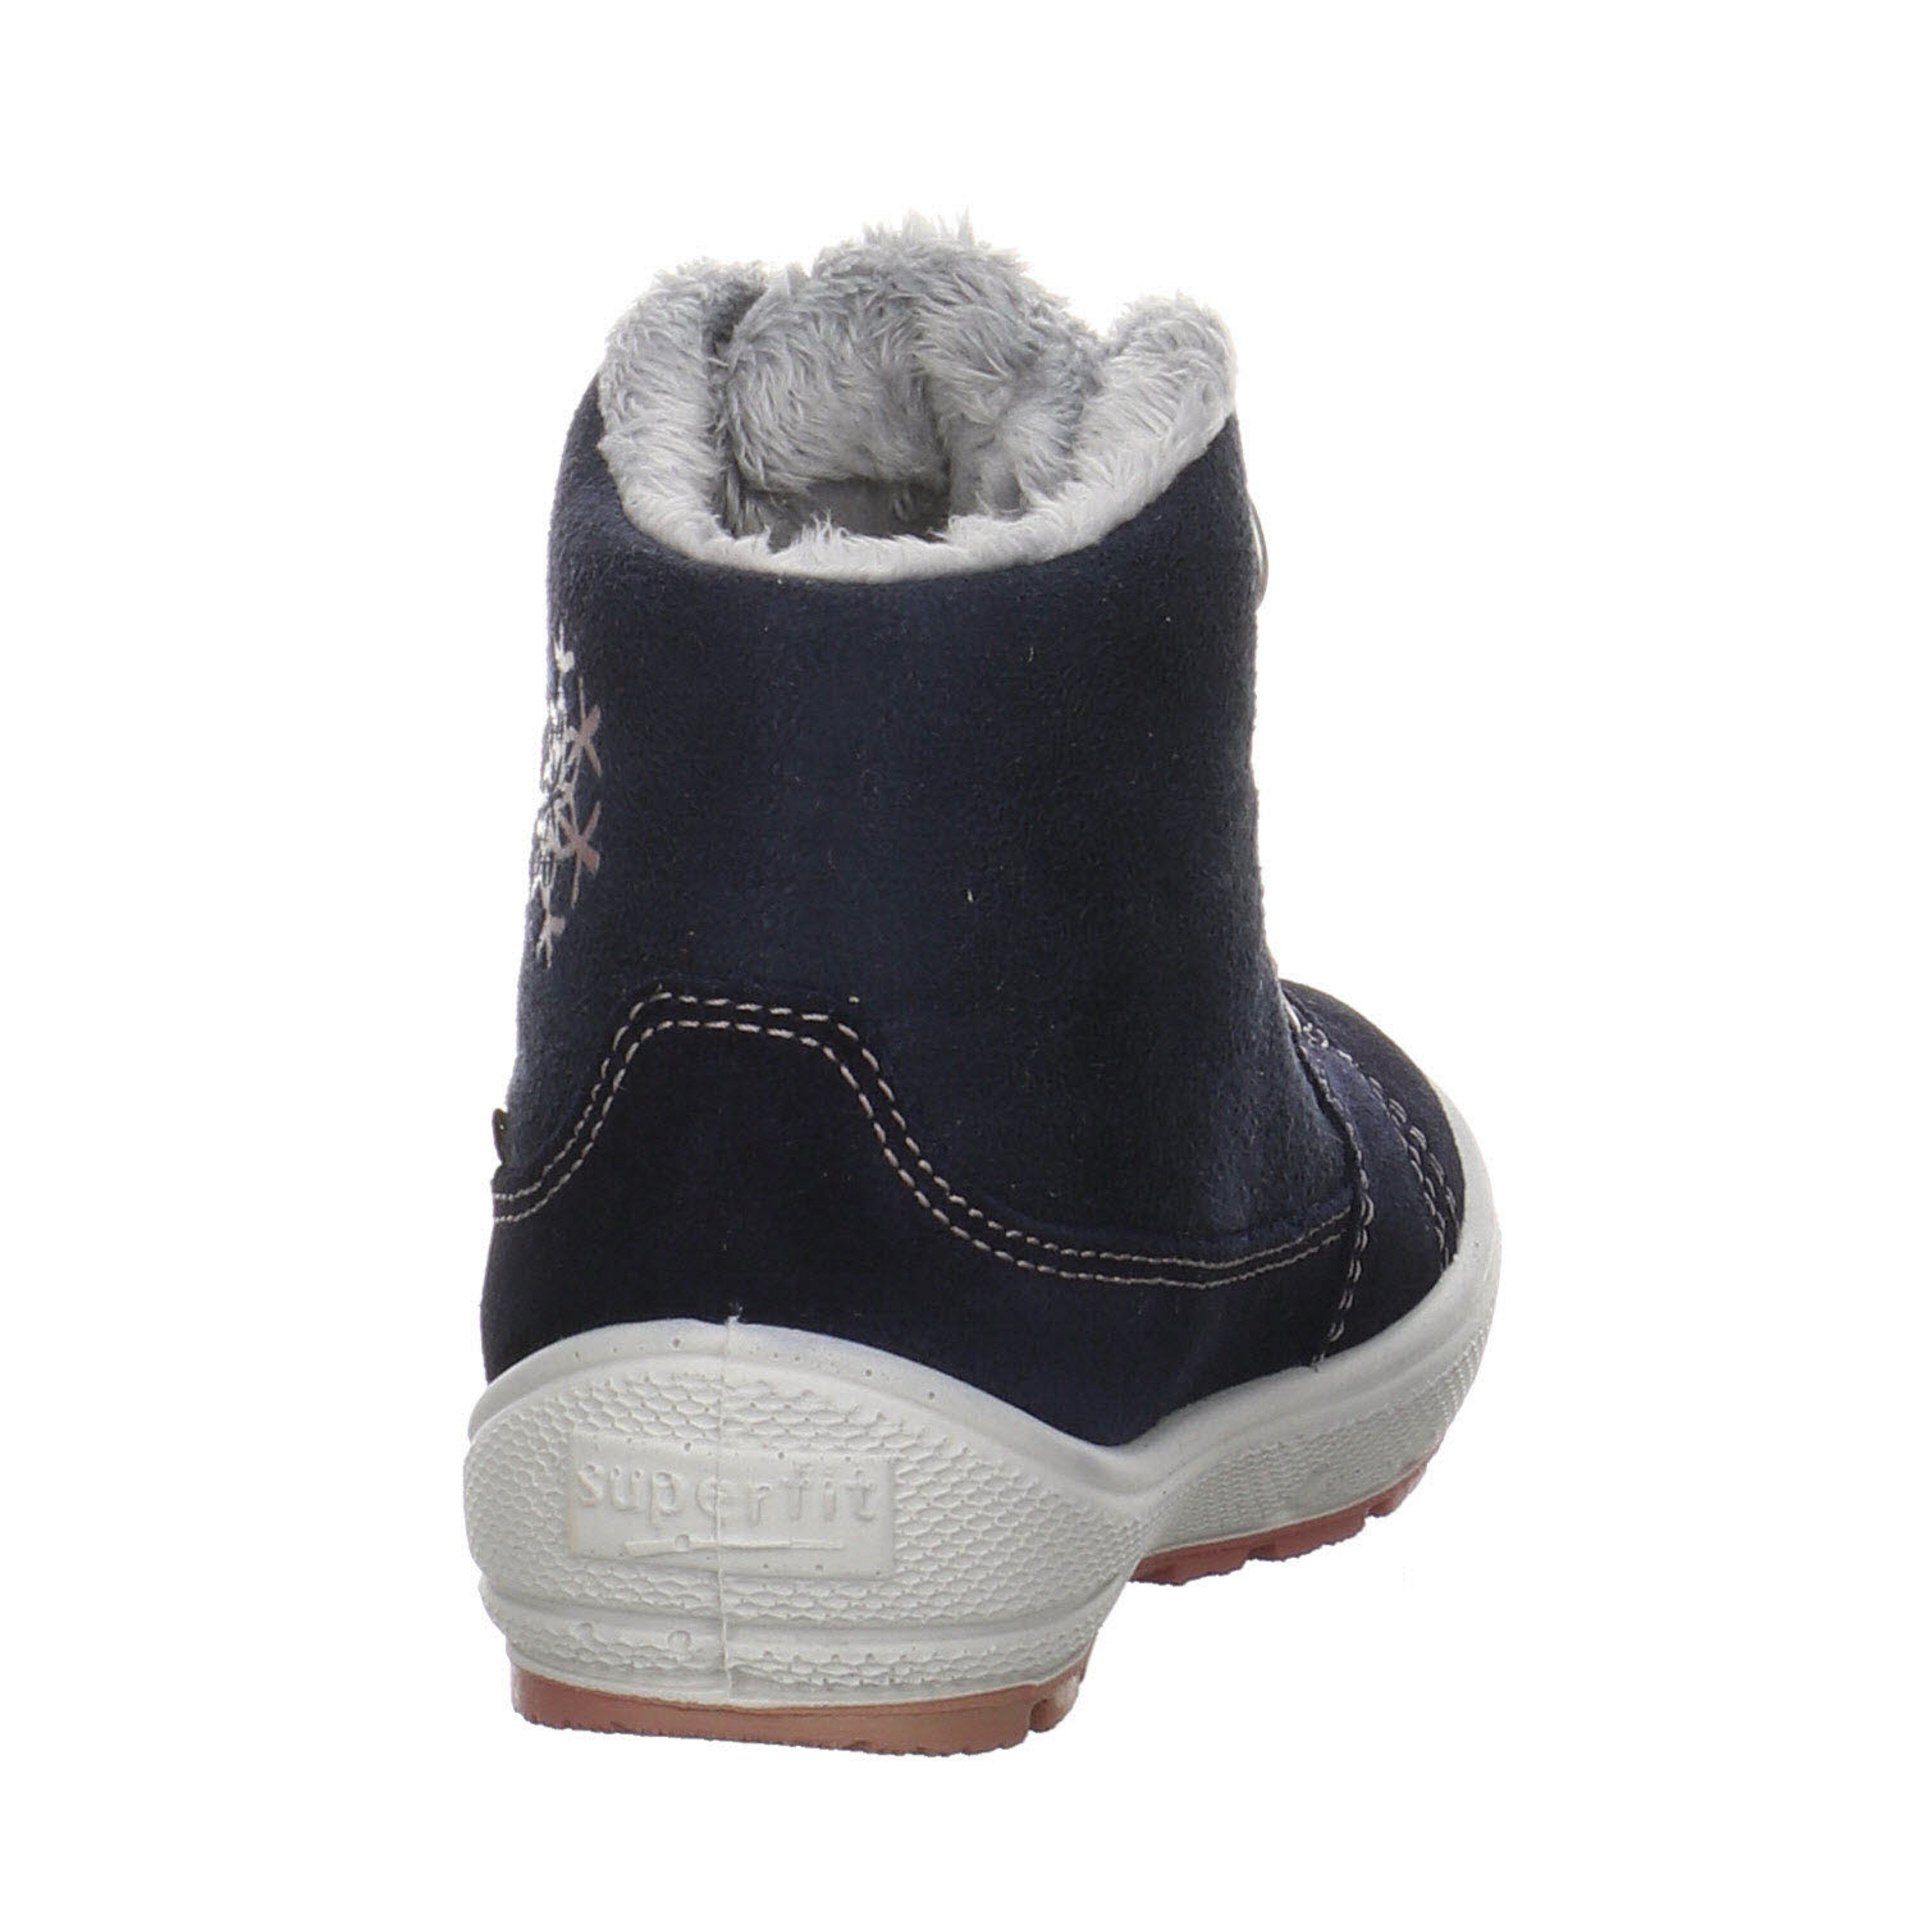 Lauflernschuhe Lauflernschuh Leder-/Textilkombination Baby Superfit Boots Krabbelschuhe Groovy